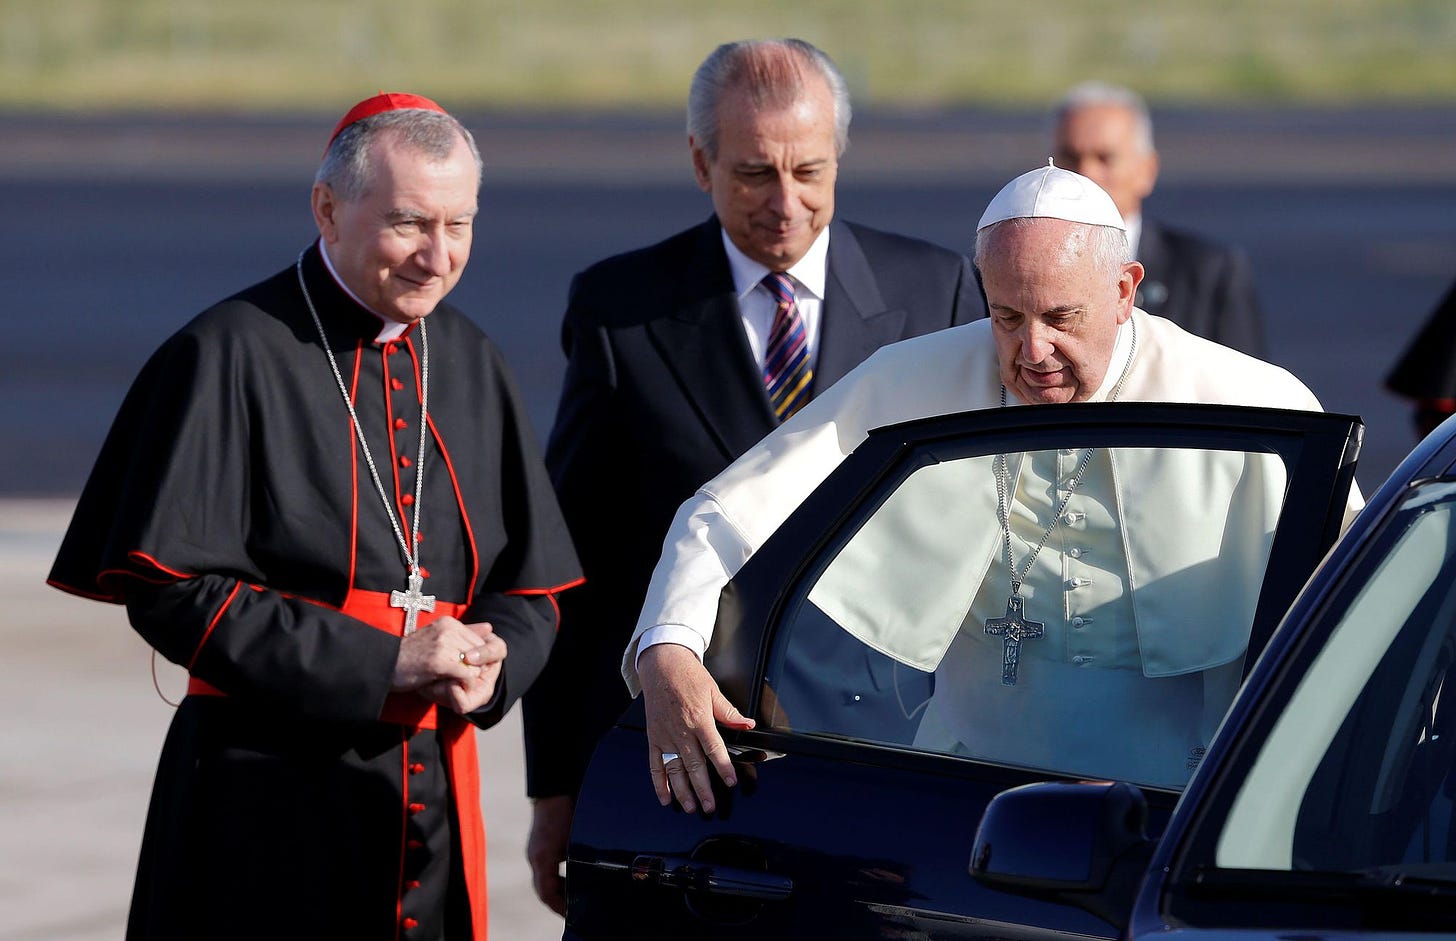 The Vatican’s diplomatic crisis of crises